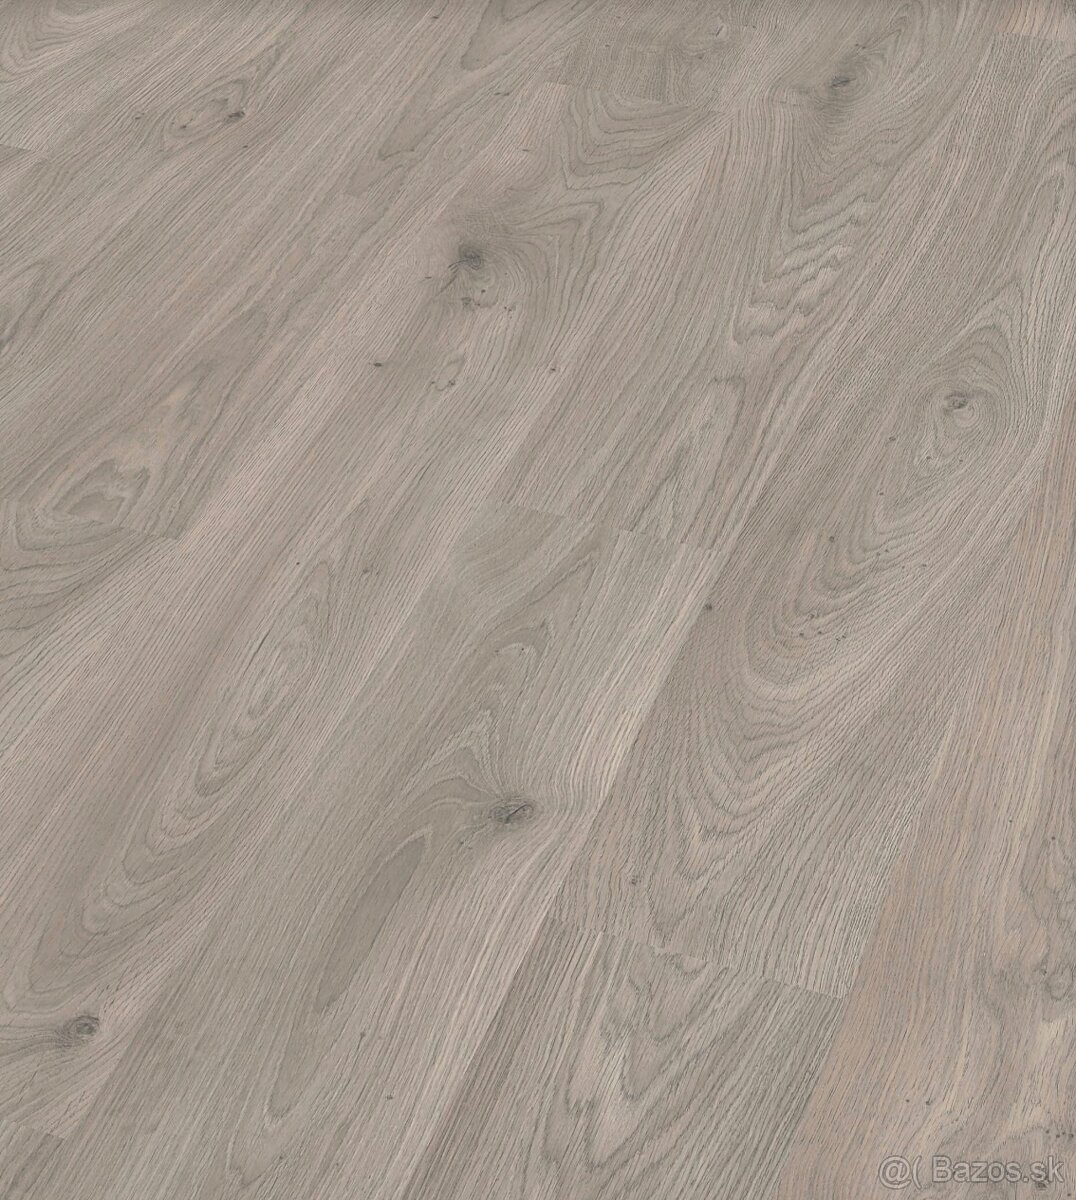 MEISTER - Monclair oak 7148 kvalitna laminatova podlaha